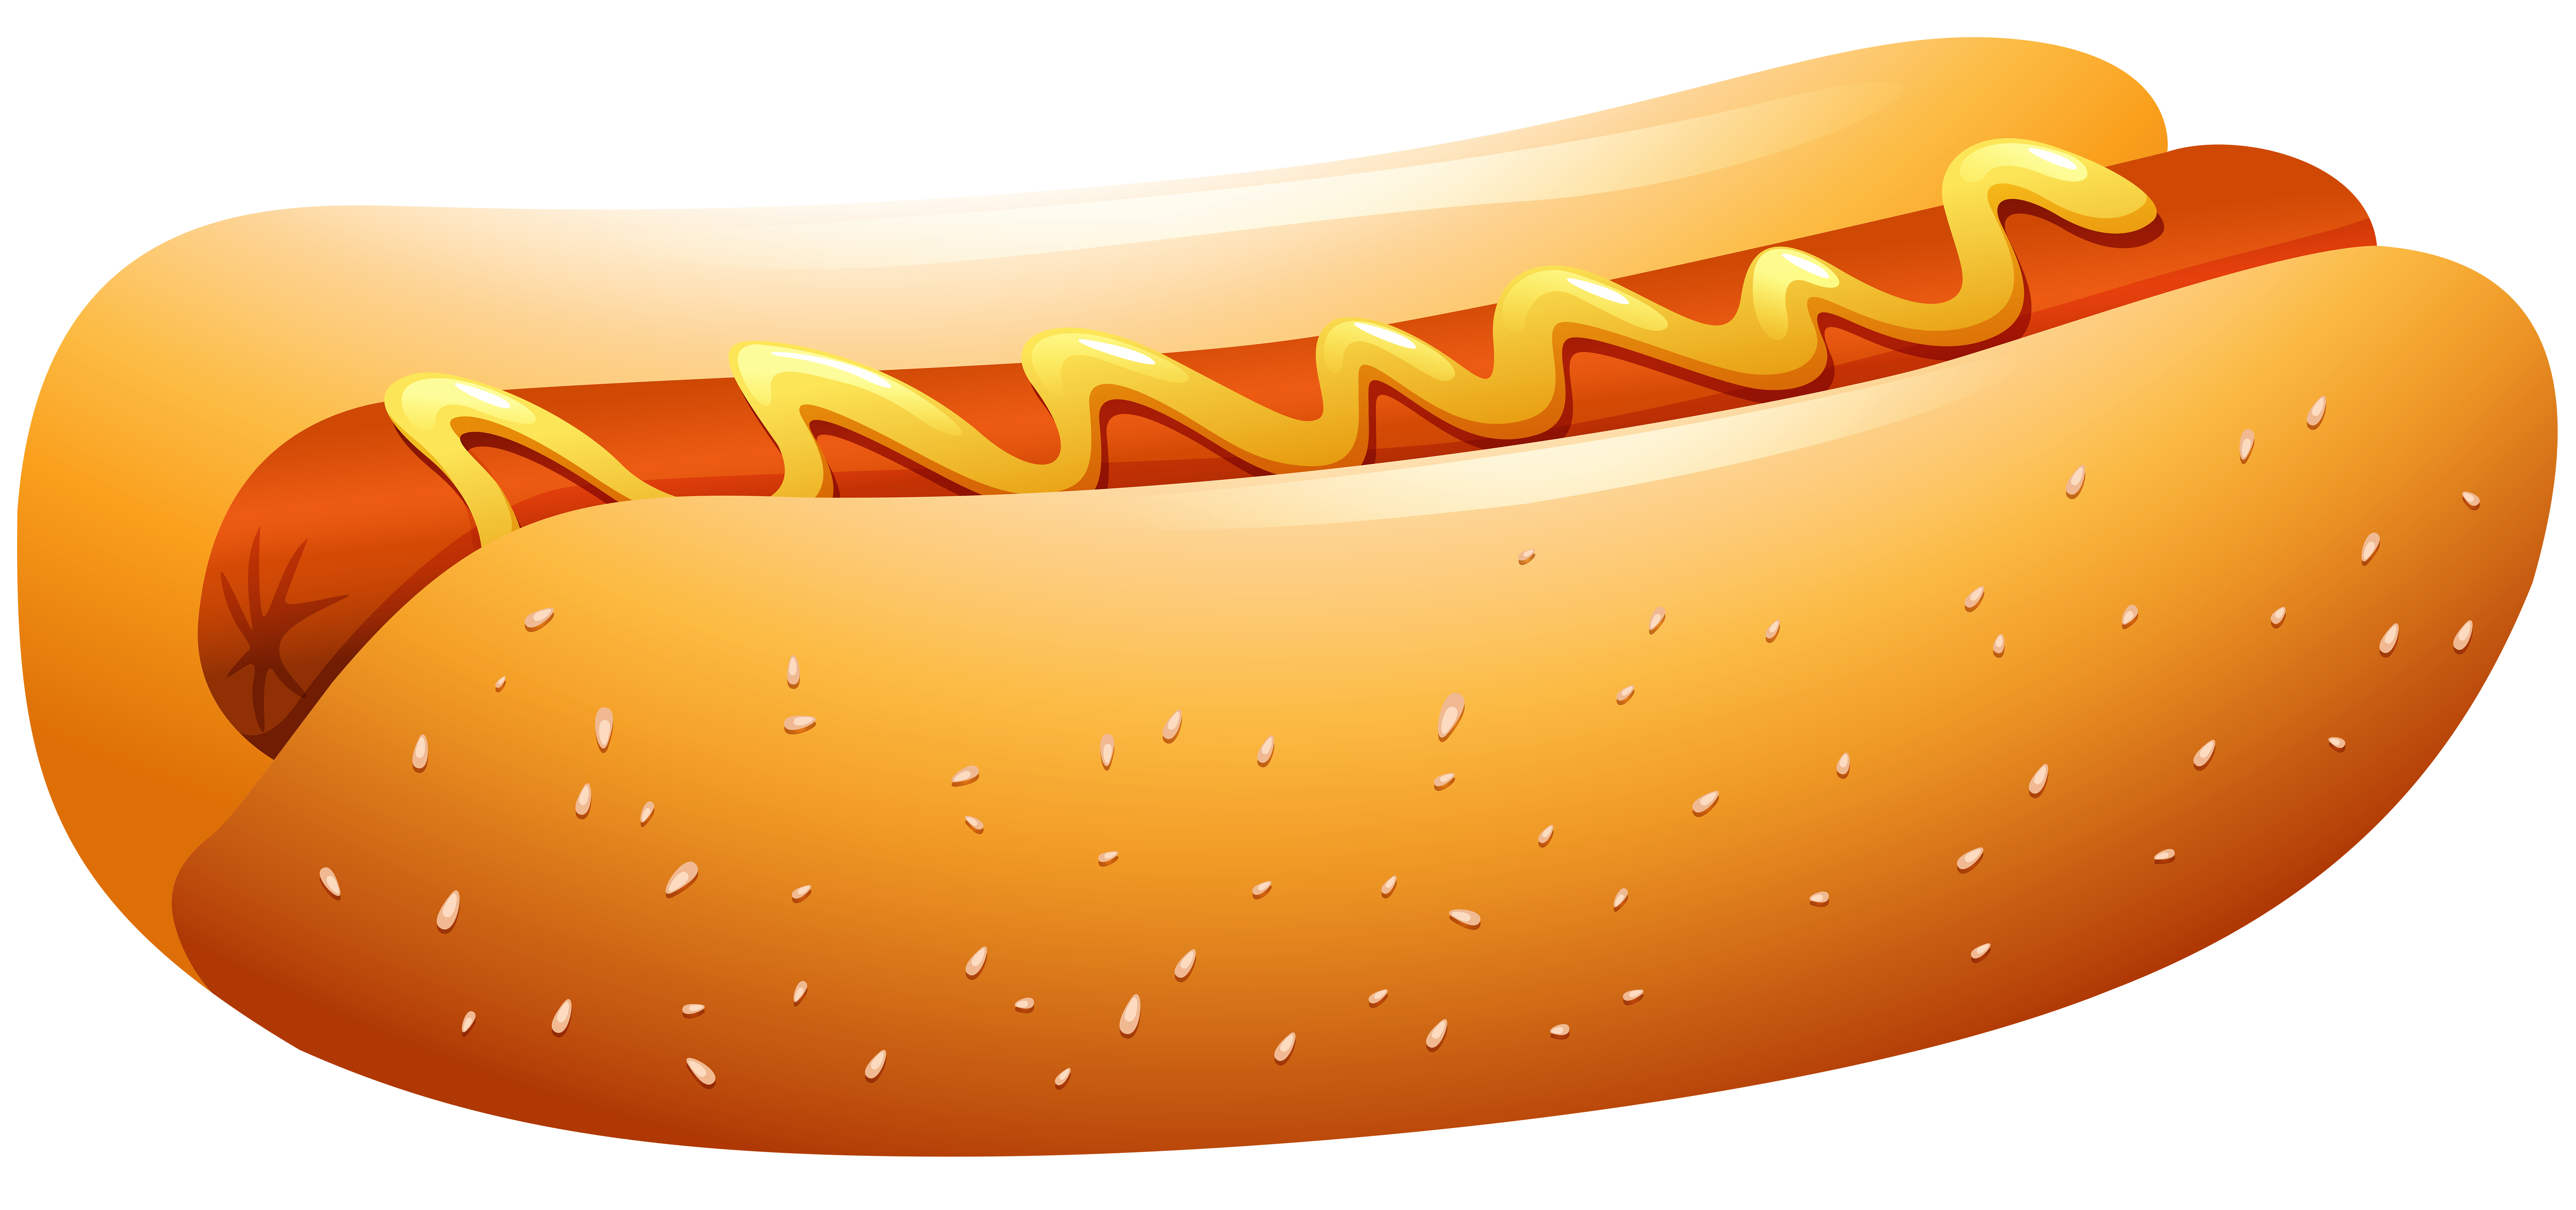 Hot Dog Images Clip Art : Top 60 Hot Dog Clip Art, Vector Graphics And ...